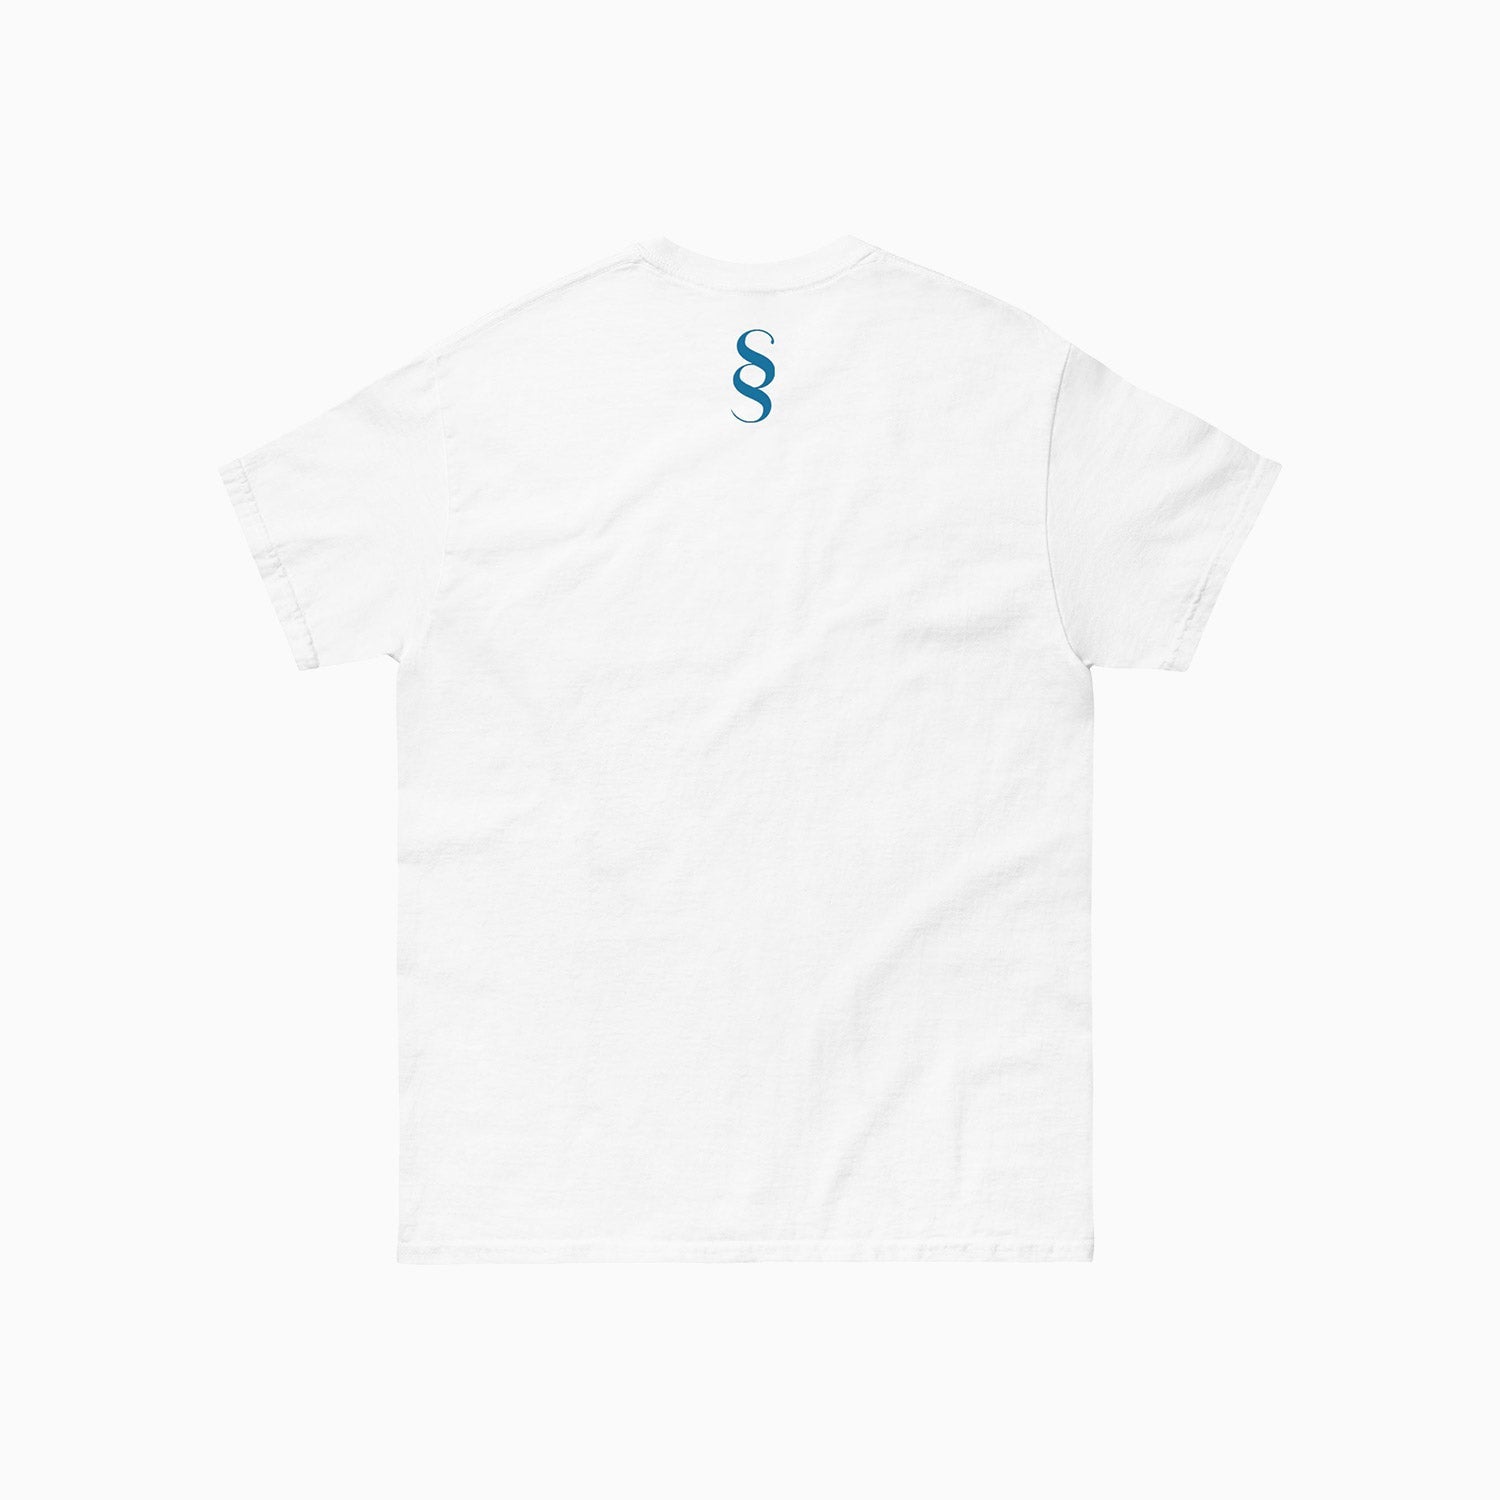 signature-design-printed-crew-neck-white-t-shirt-for-men-st111-100